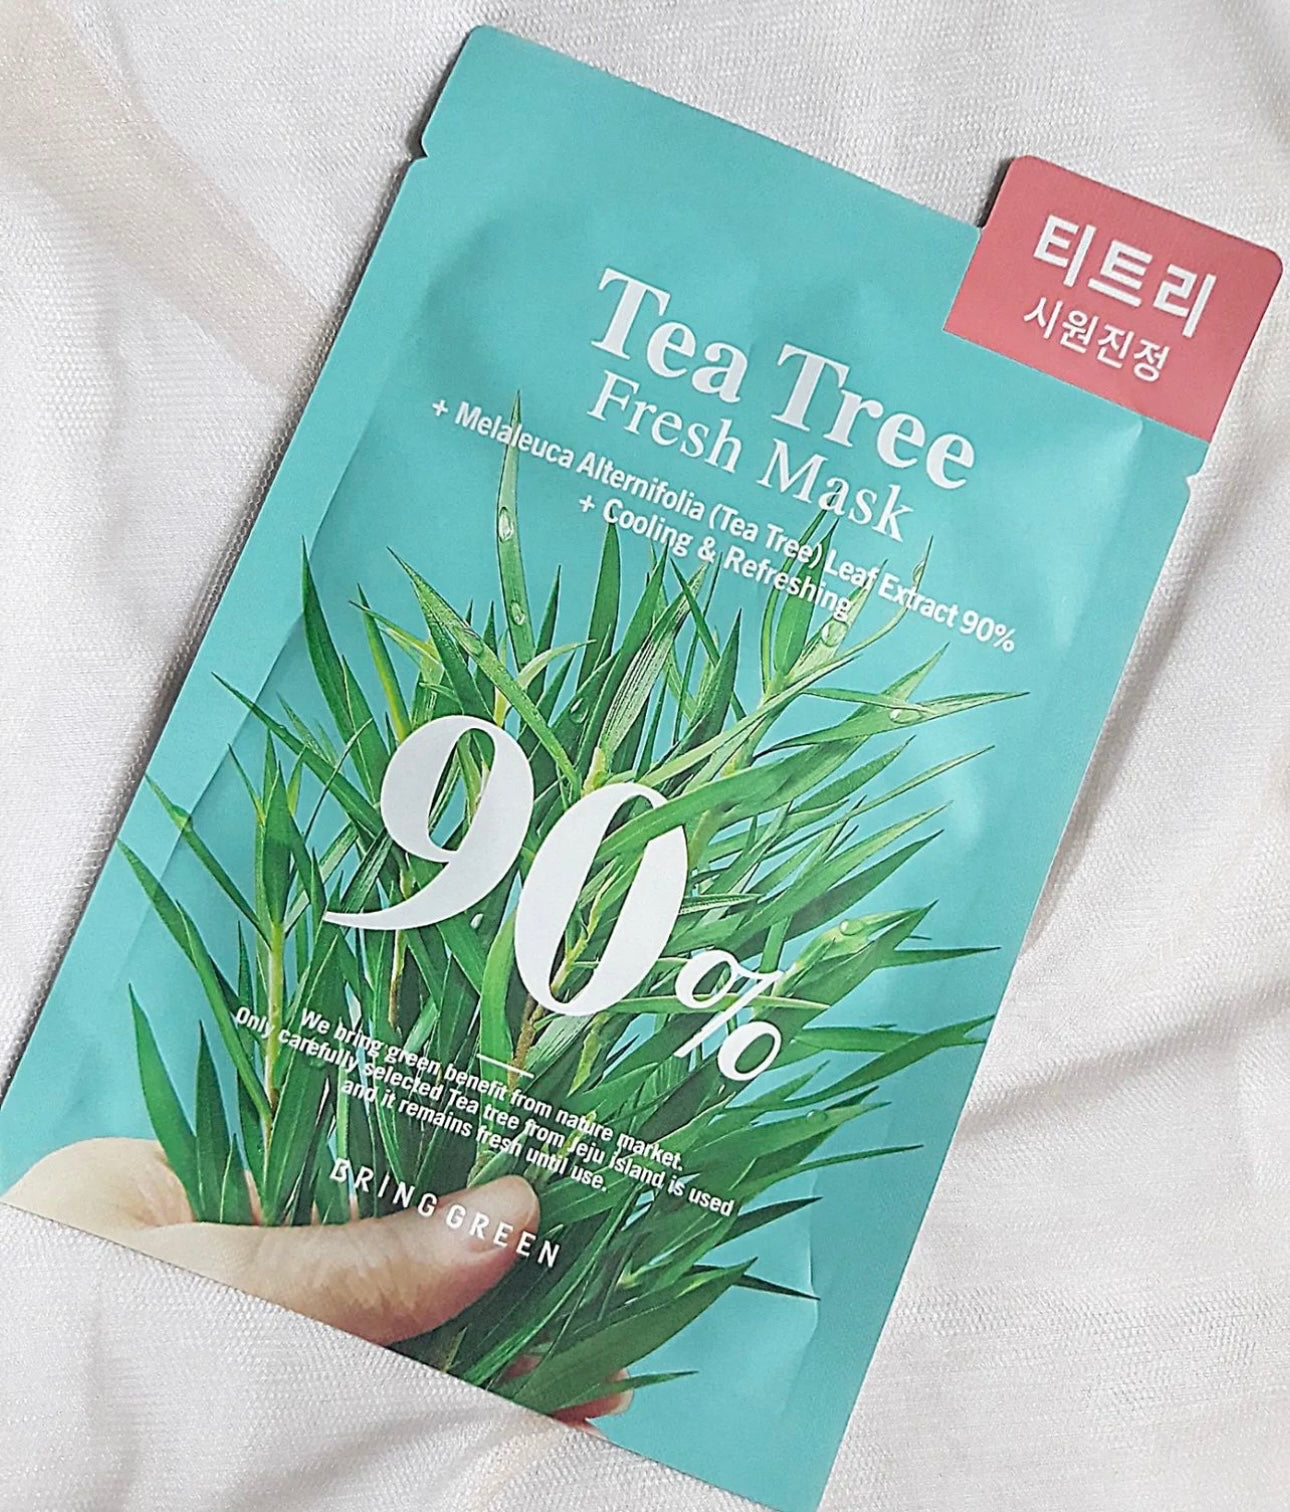 VEGAN純素面膜🌿| BRING GREEN 茶樹修護舒緩面膜| 為肌膚帶來茶樹的清爽鎮靜效果❄️